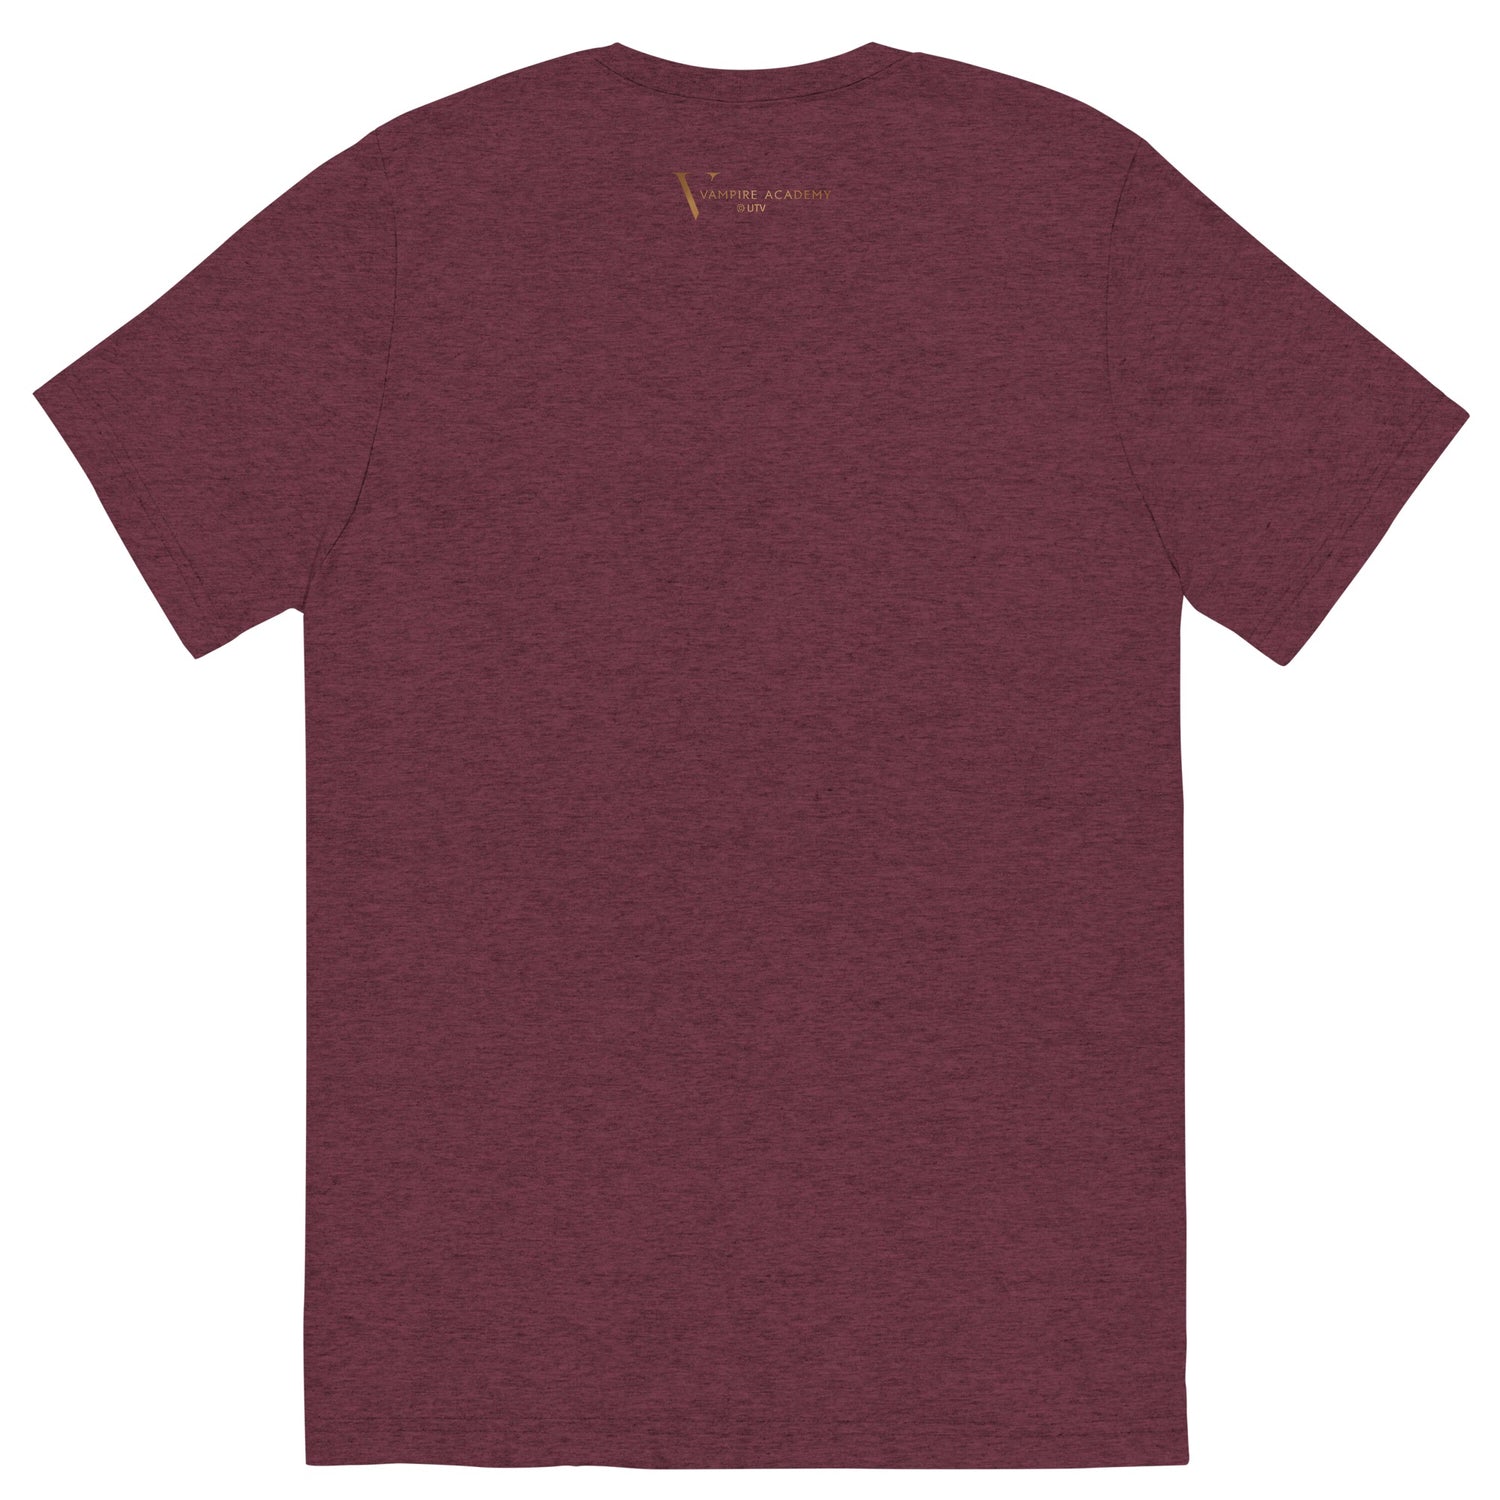 Vampire Academy Elements Adult Tri-Blend T-Shirt